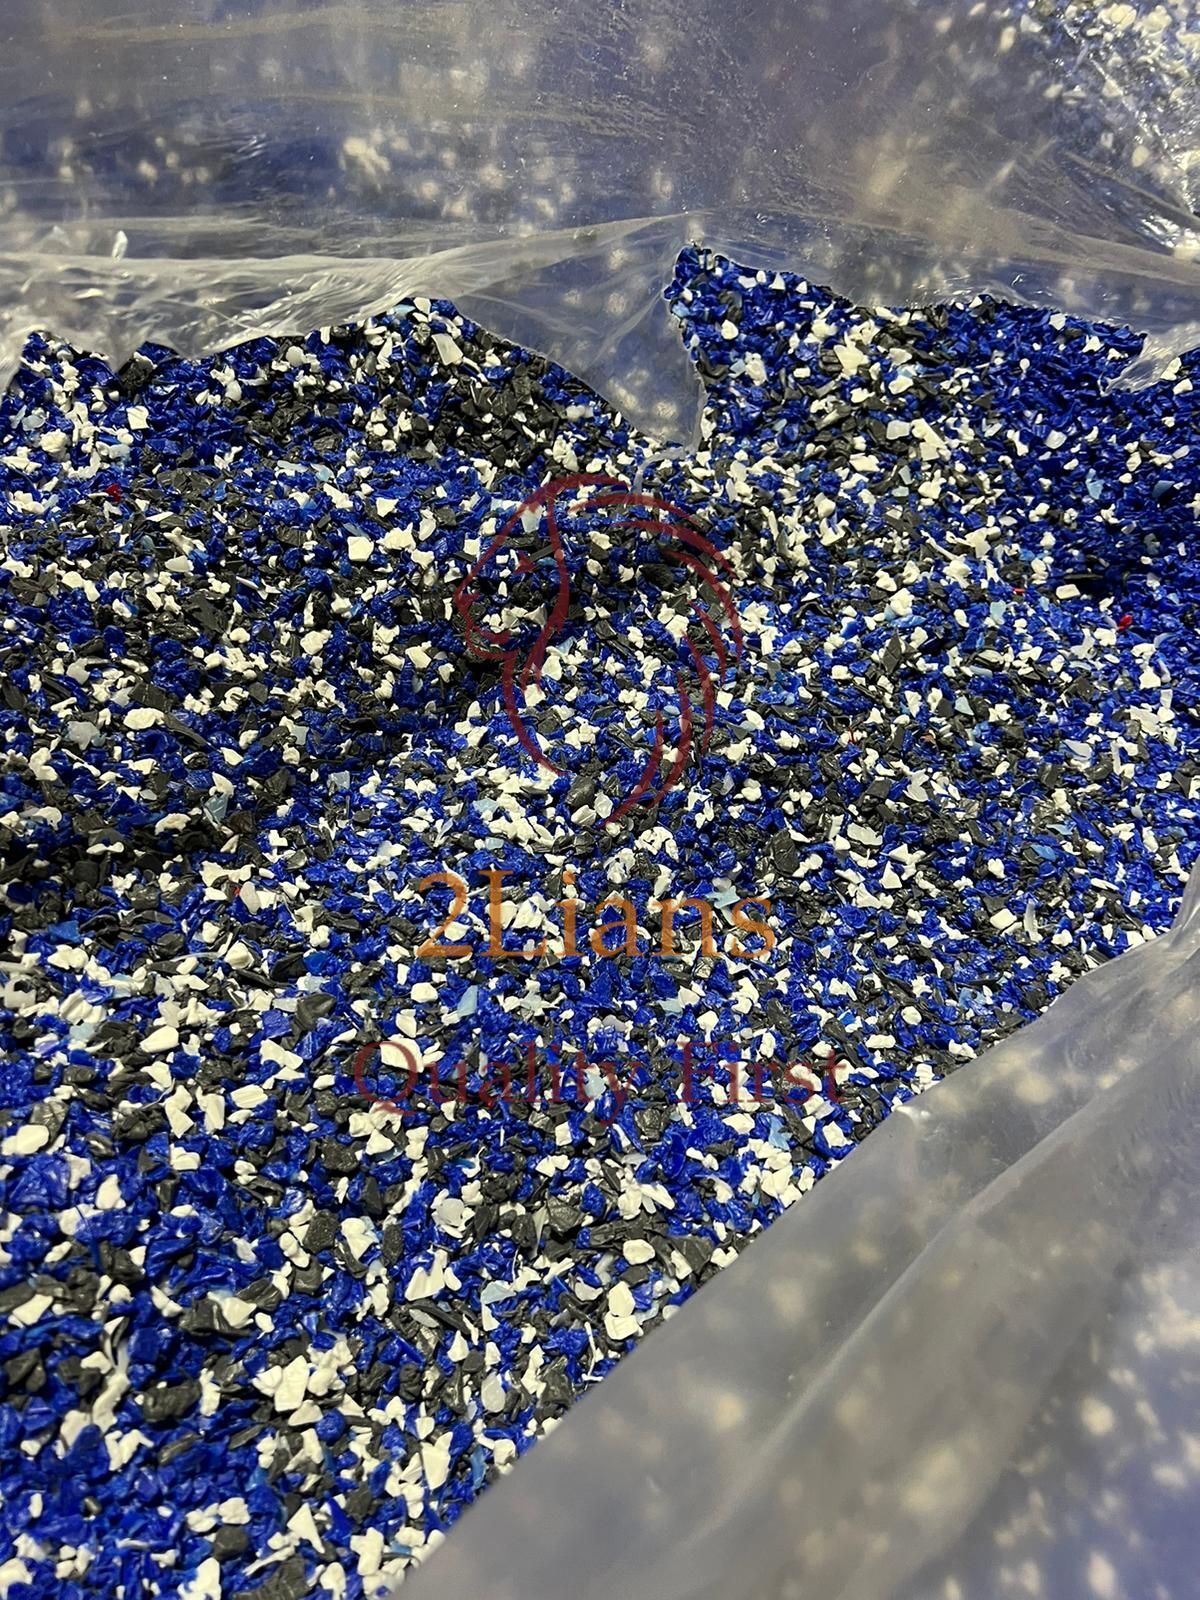 HDPE Blow Molding Mixed Color Plastic Scrap Material For Sales